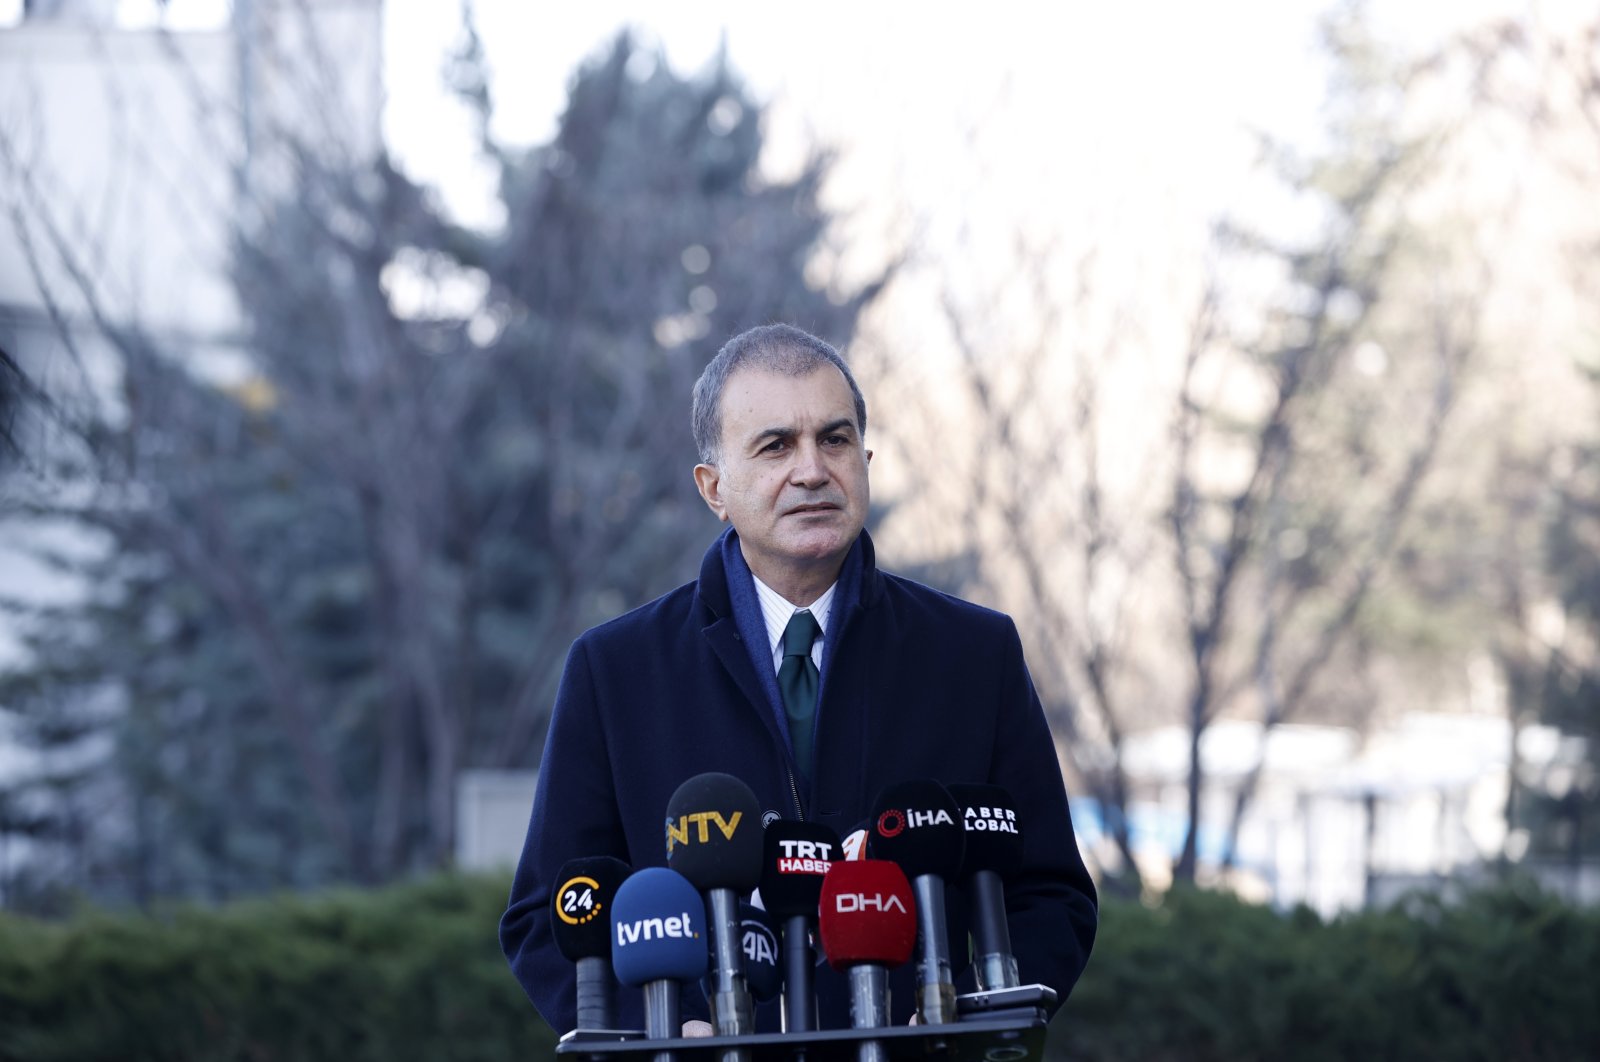 AK Party Spokesperson Ömer Çelik speaks to reporters at a news conference in Ankara, Jan. 5, 2022. (AA Photo)